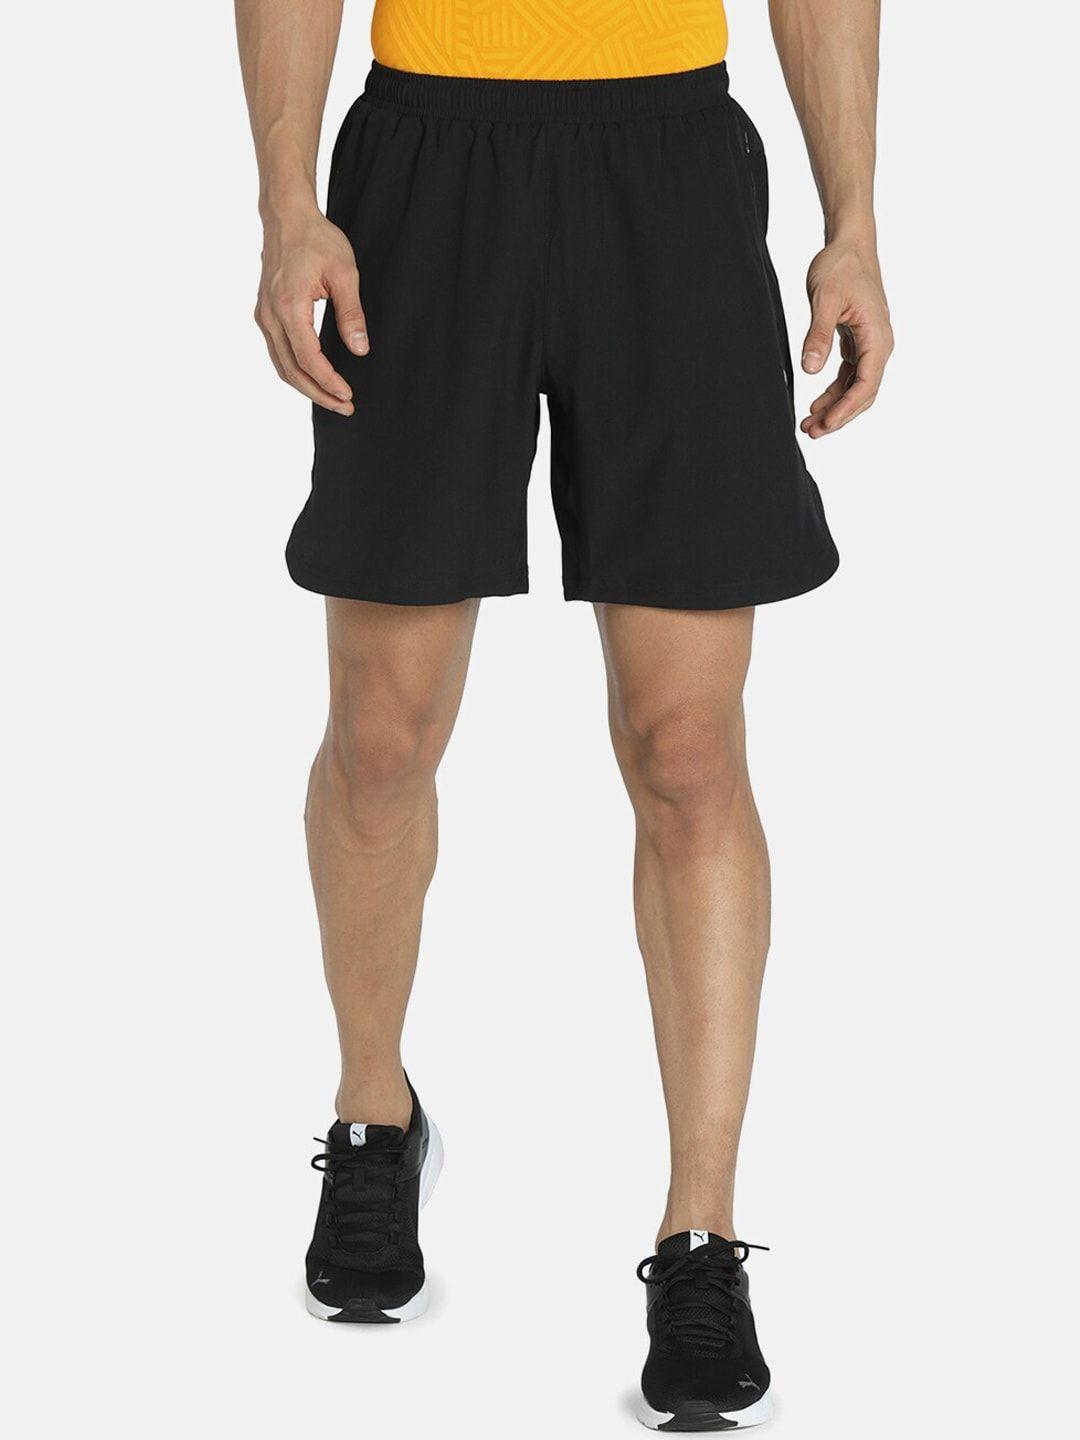 puma-men-black-one8-virat-kohli-active-sports-shorts